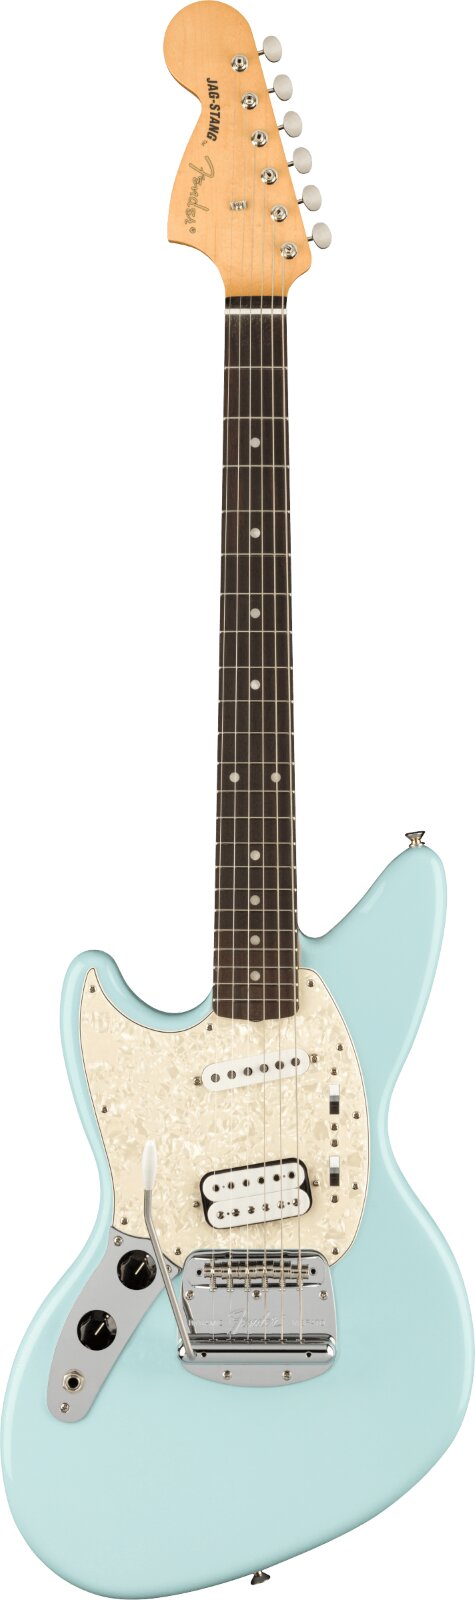 Fender Kurt Cobain Jag-Stang Left-Hand, Rosewood Fingerboard, Sonic Blue : photo 1